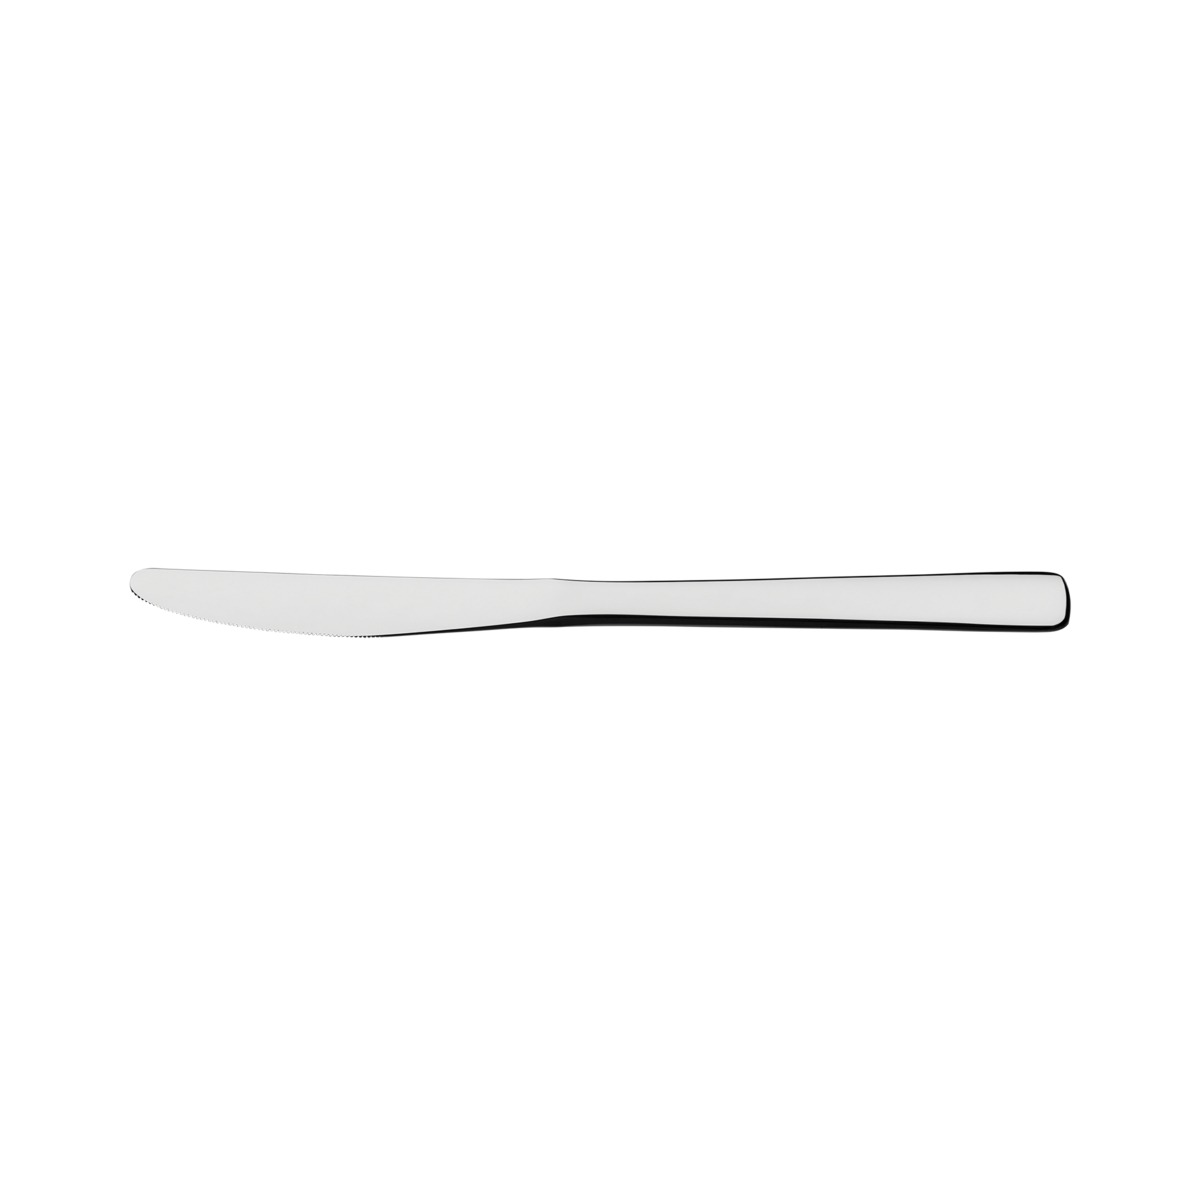 Набор ножей столовых Tramontina Oslo 2 шт